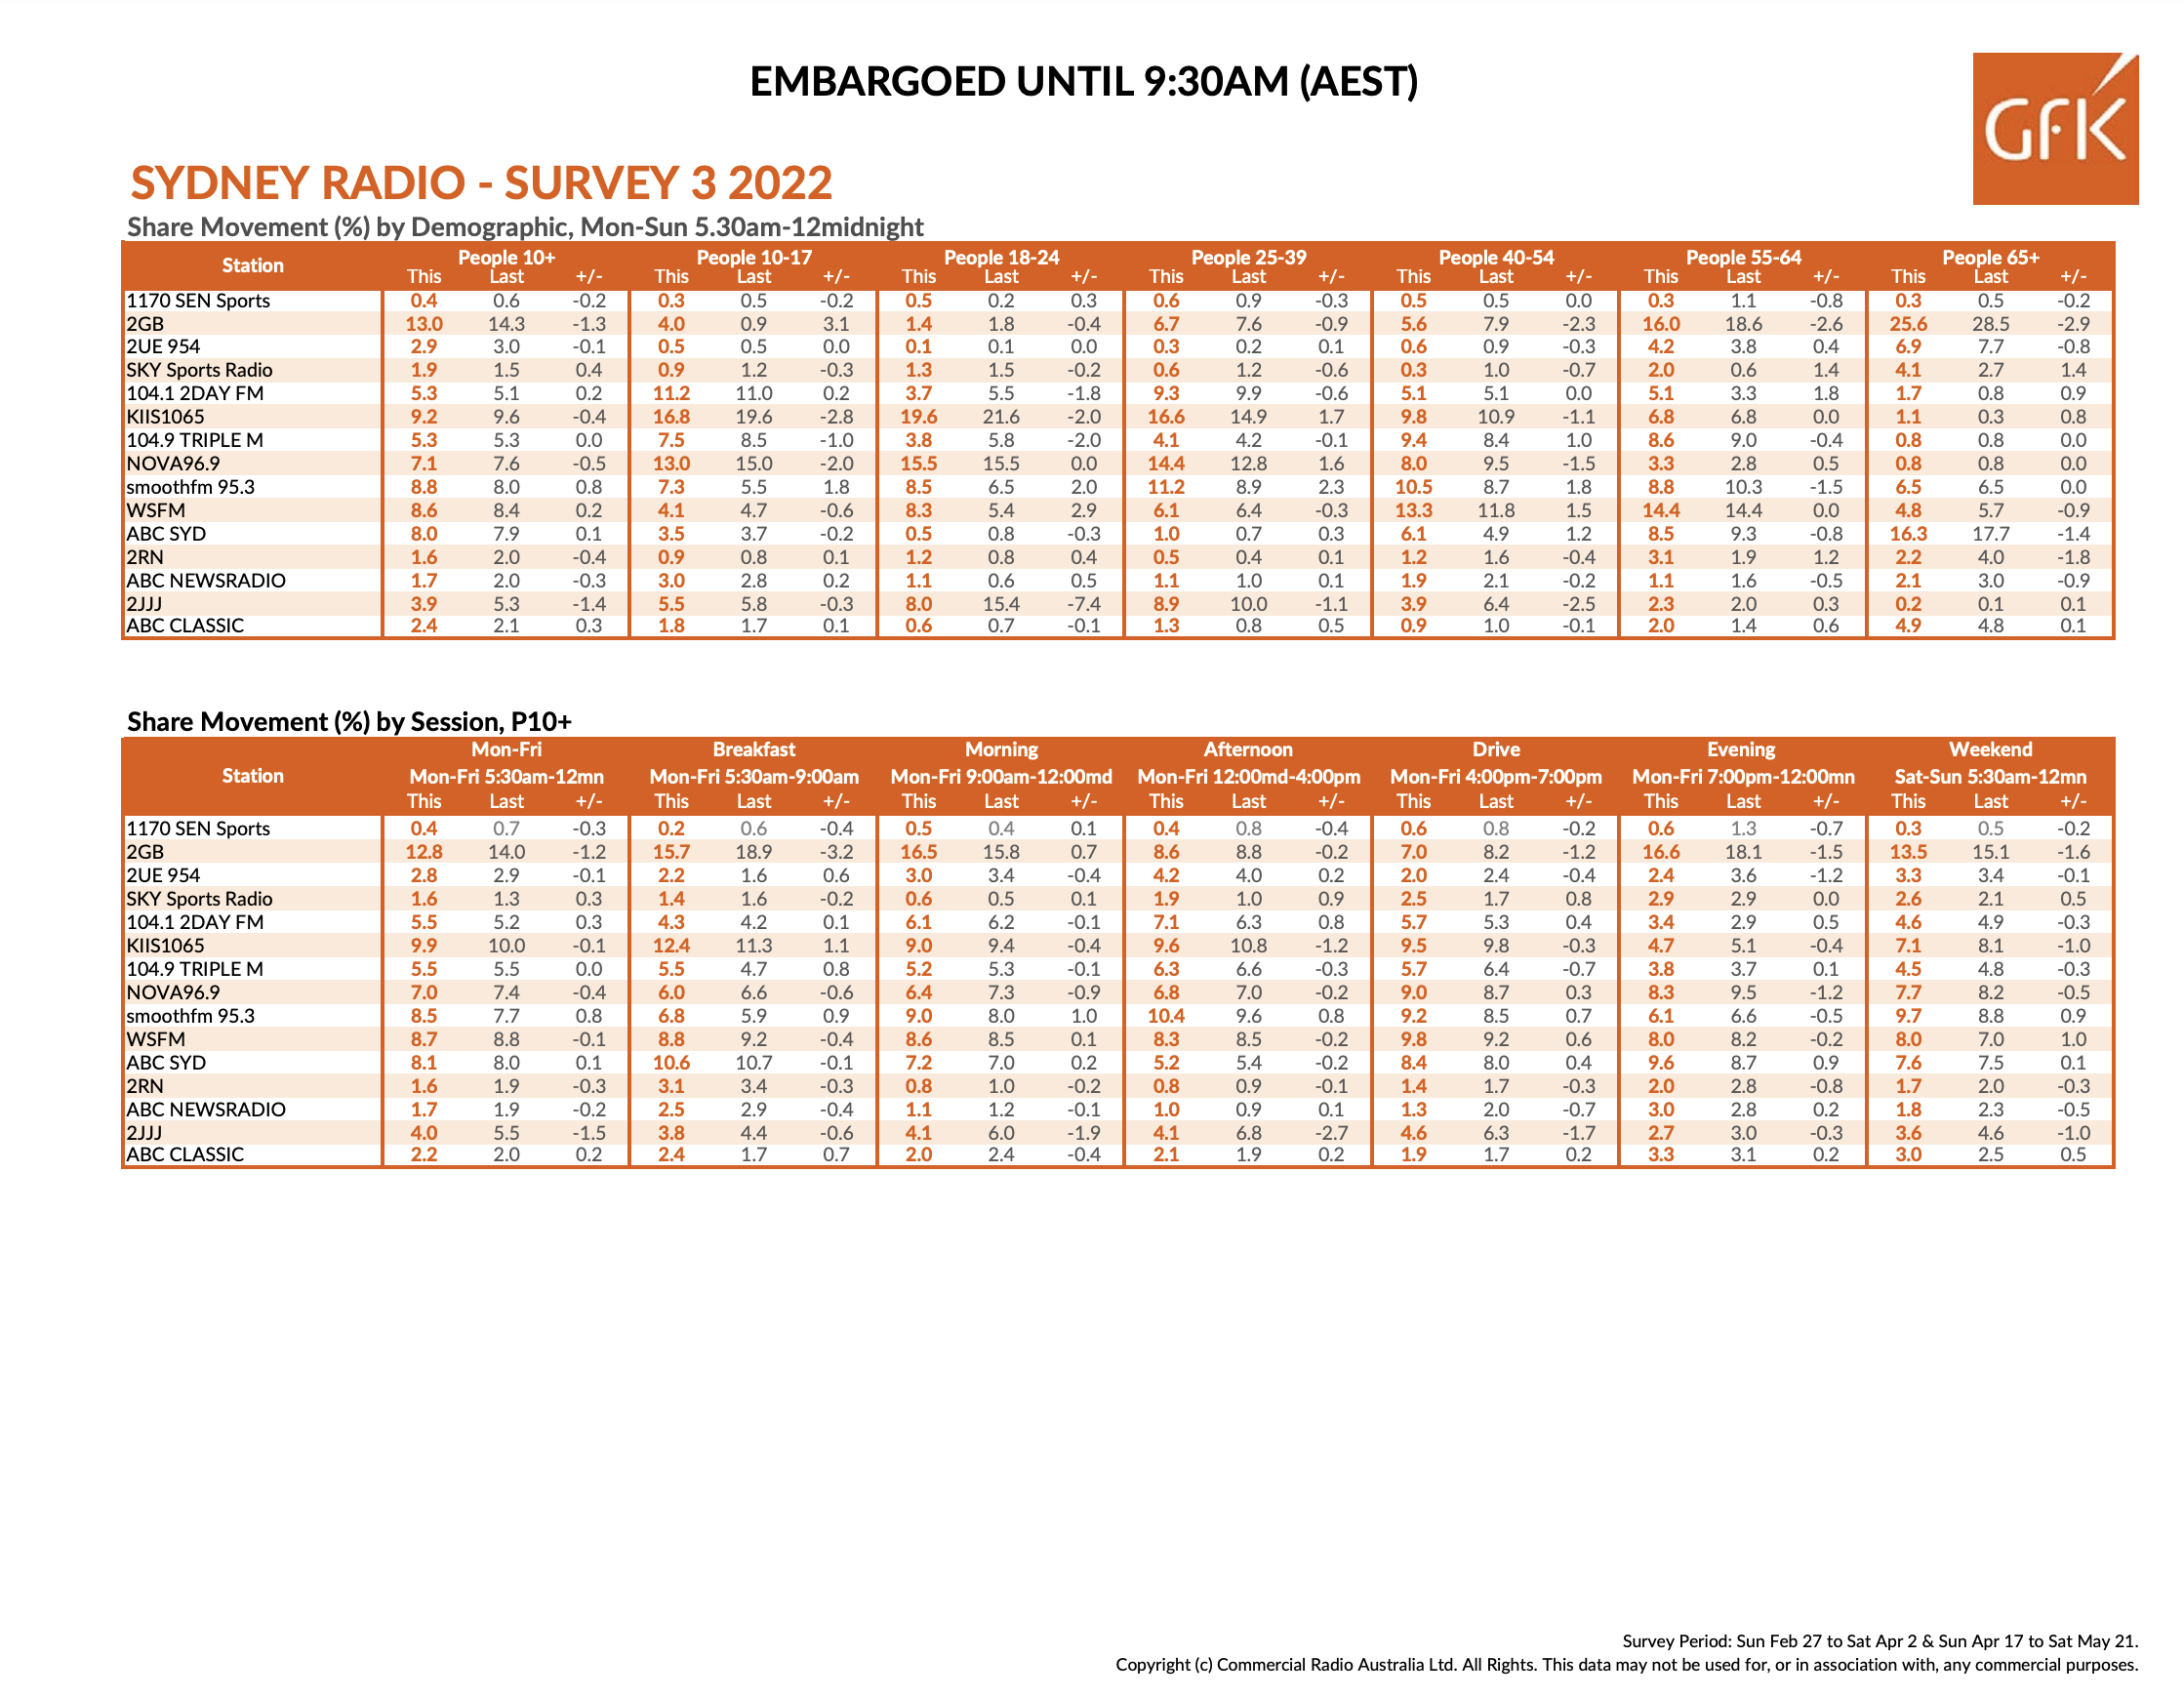 Sydney radio ratings winners Survey 3 2022